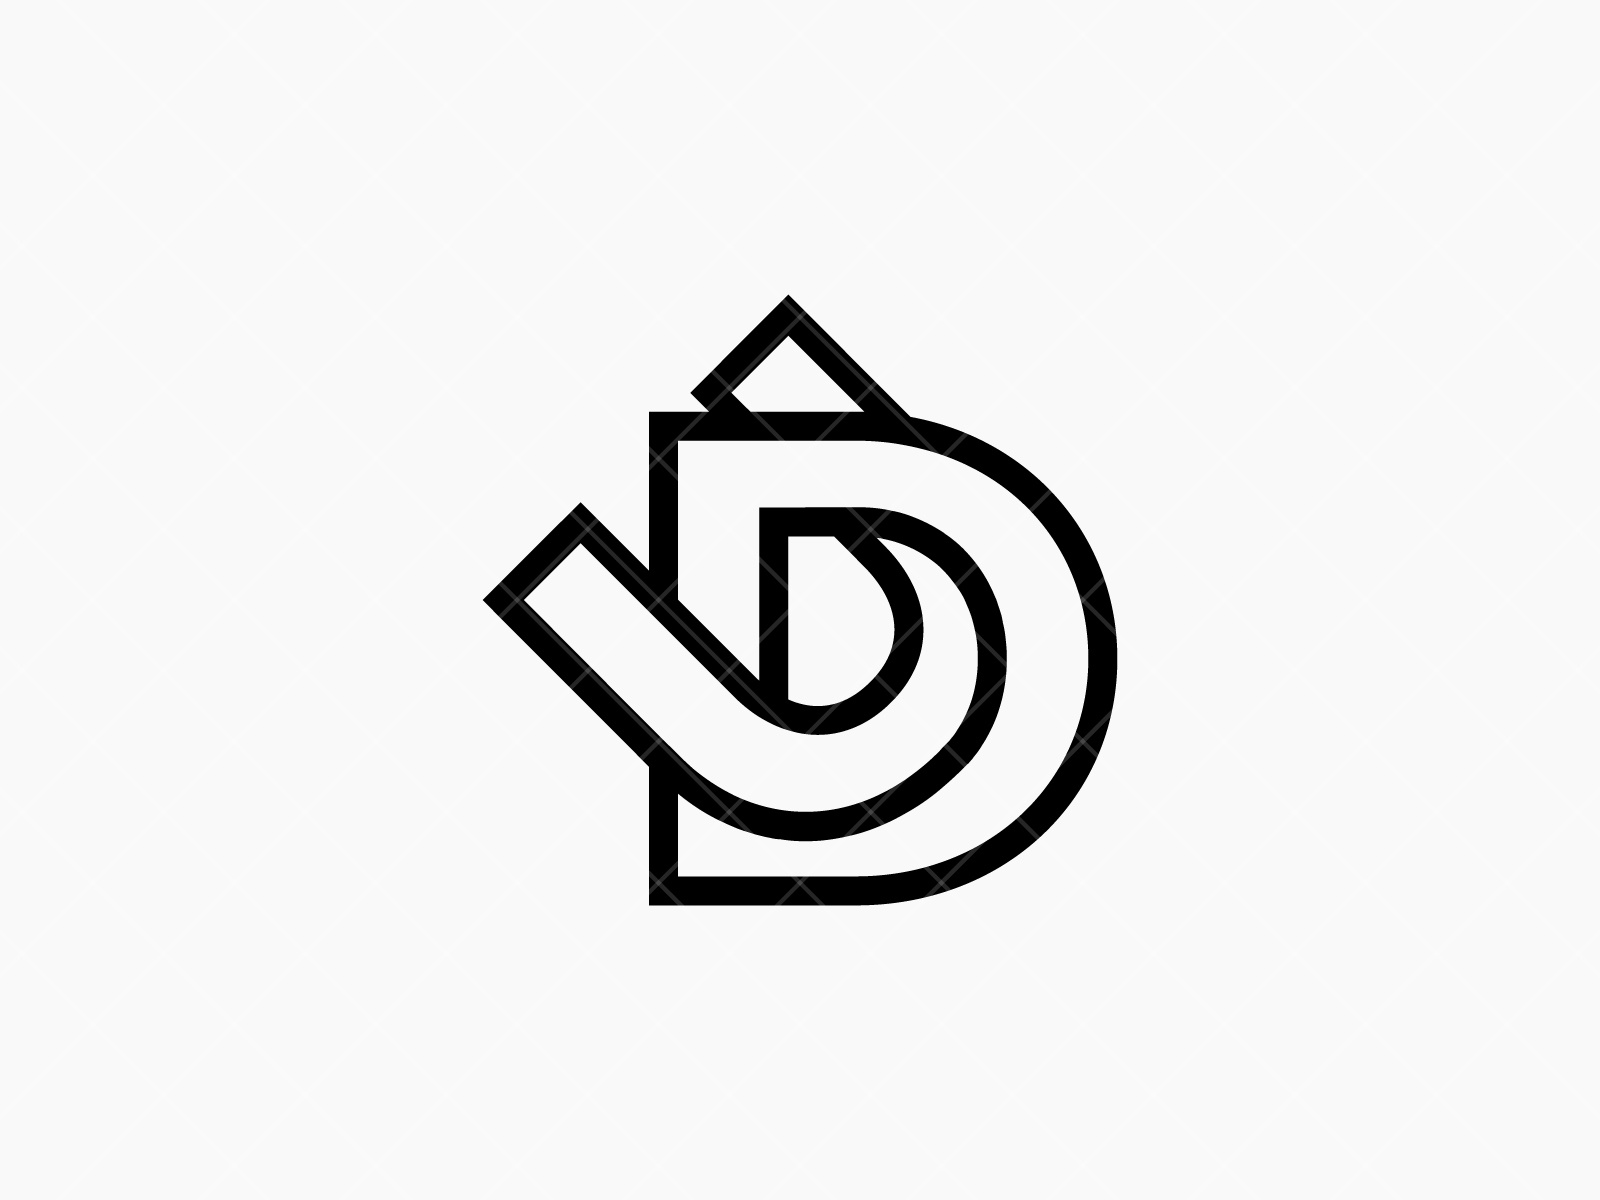 DU Logo by Sabuj Ali on Dribbble